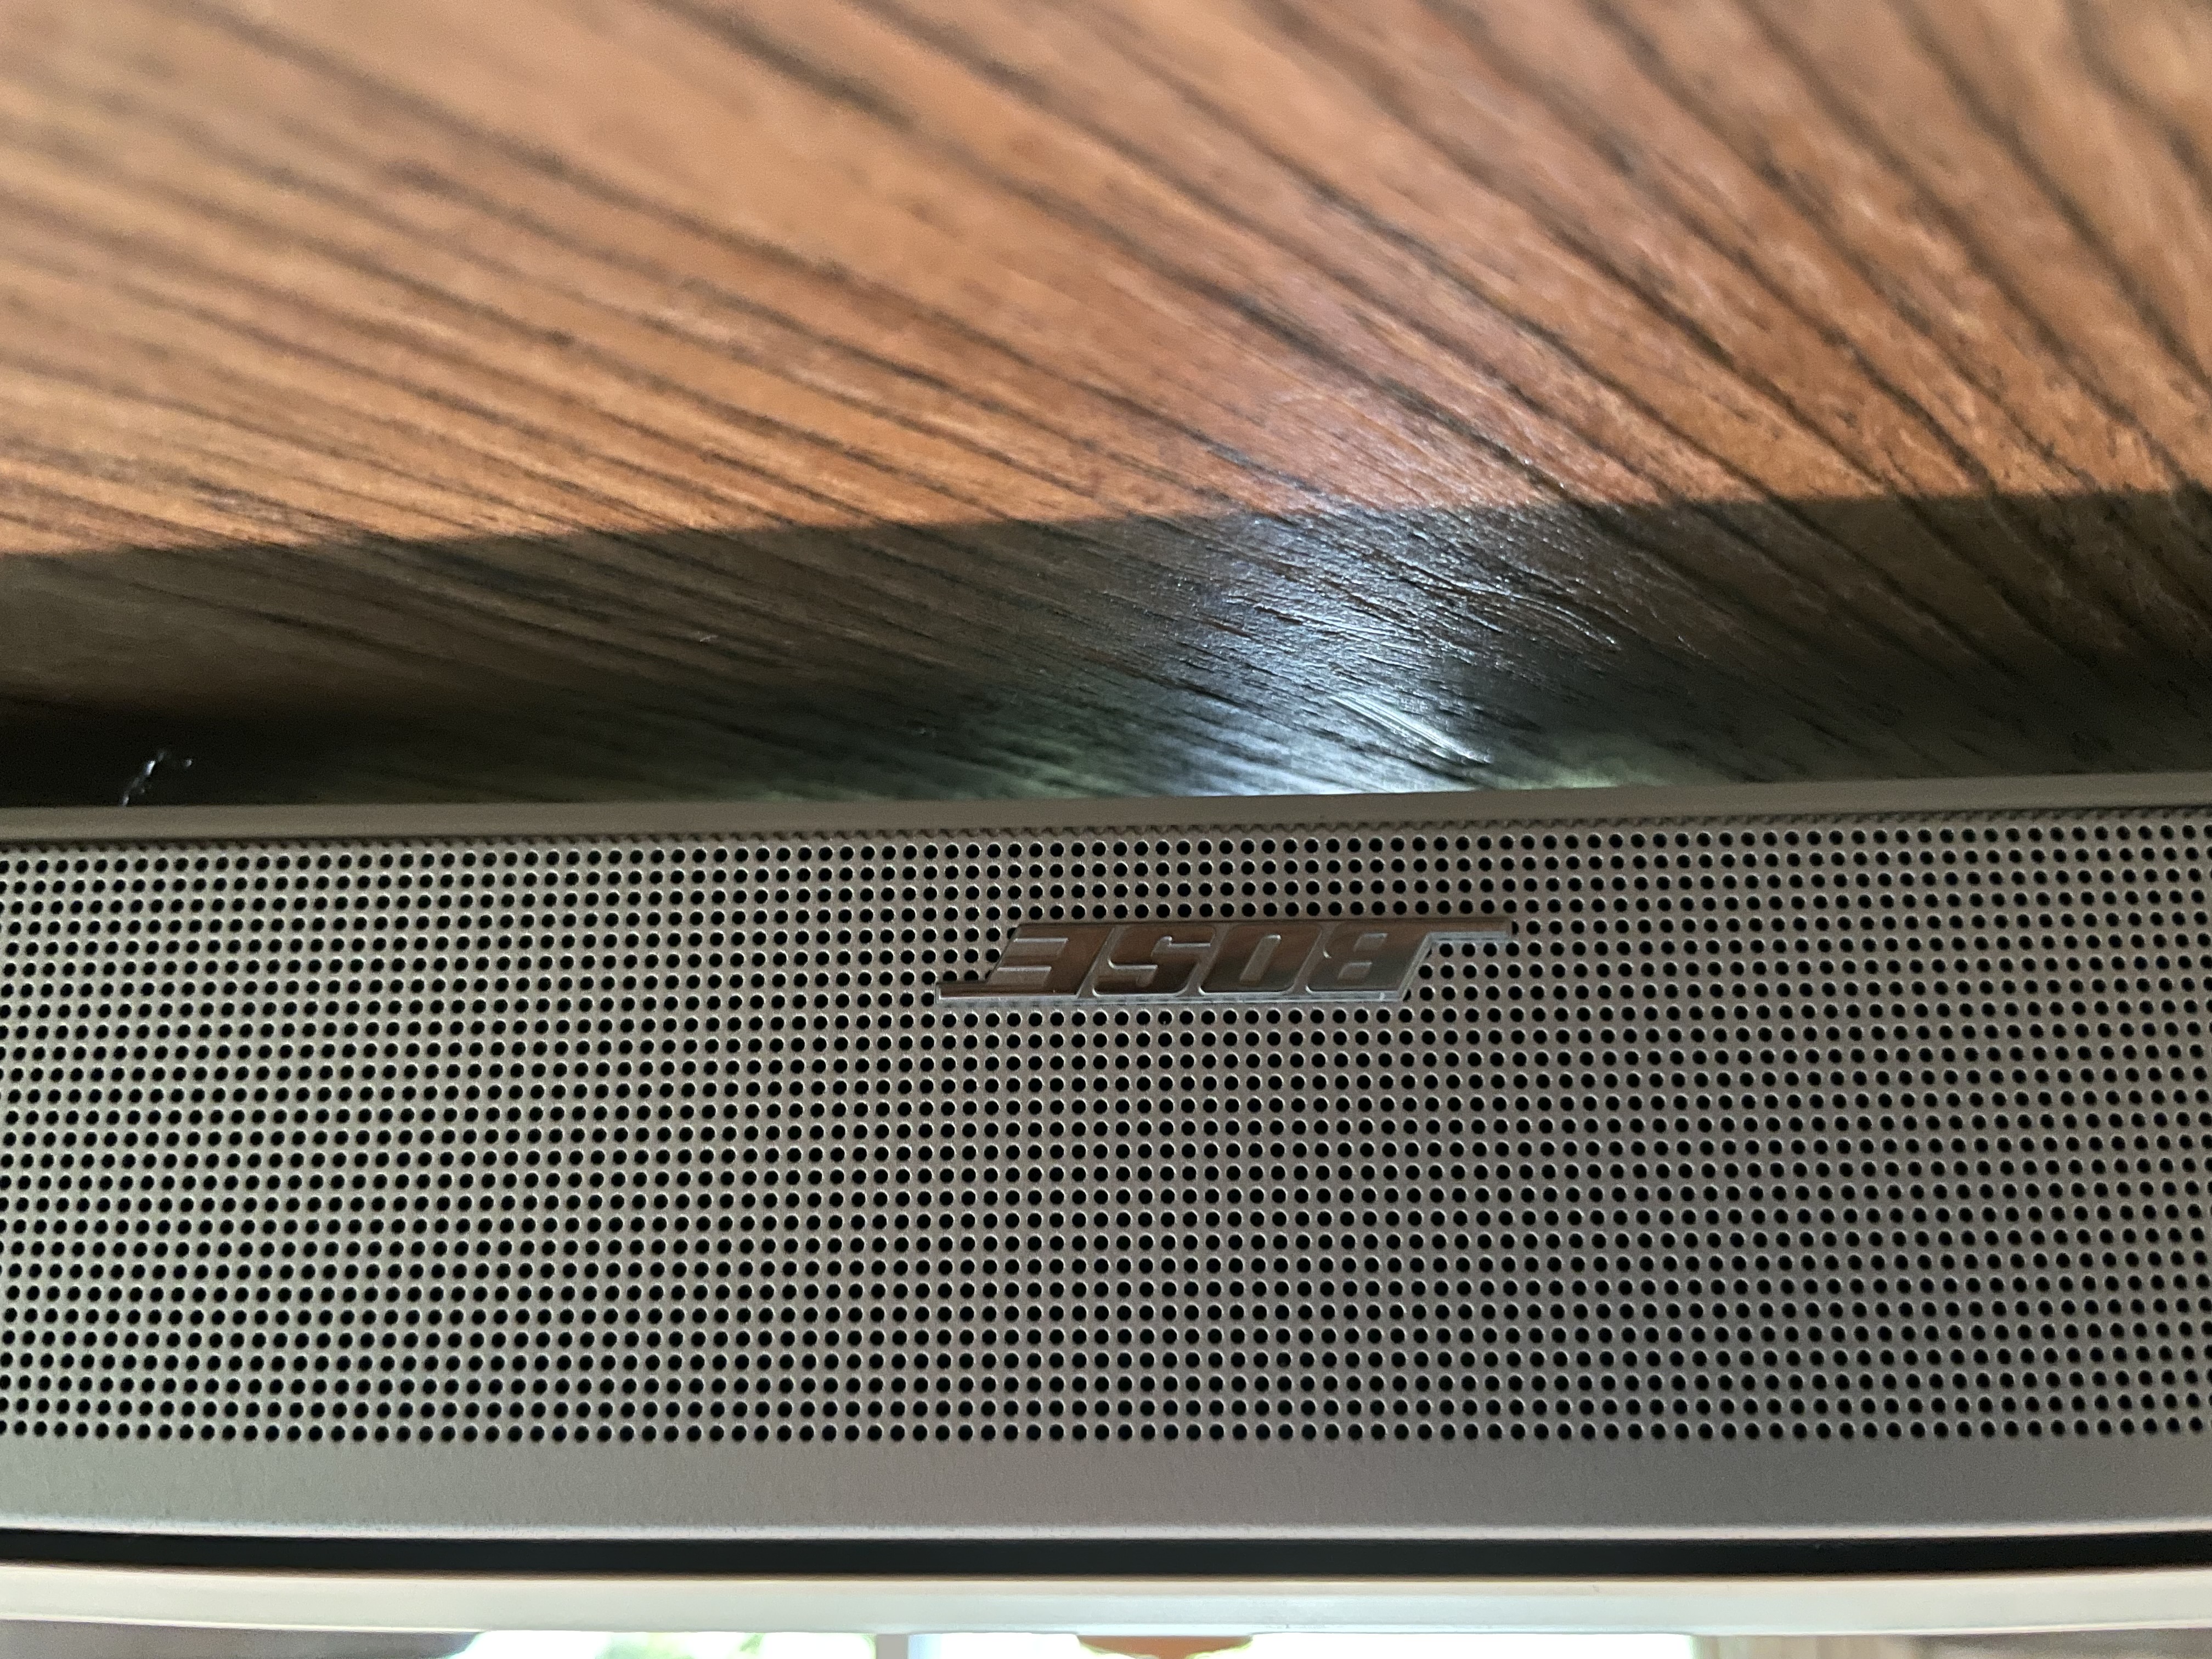 Bose Smart Soundbar 900 review: Decent sound but pricey